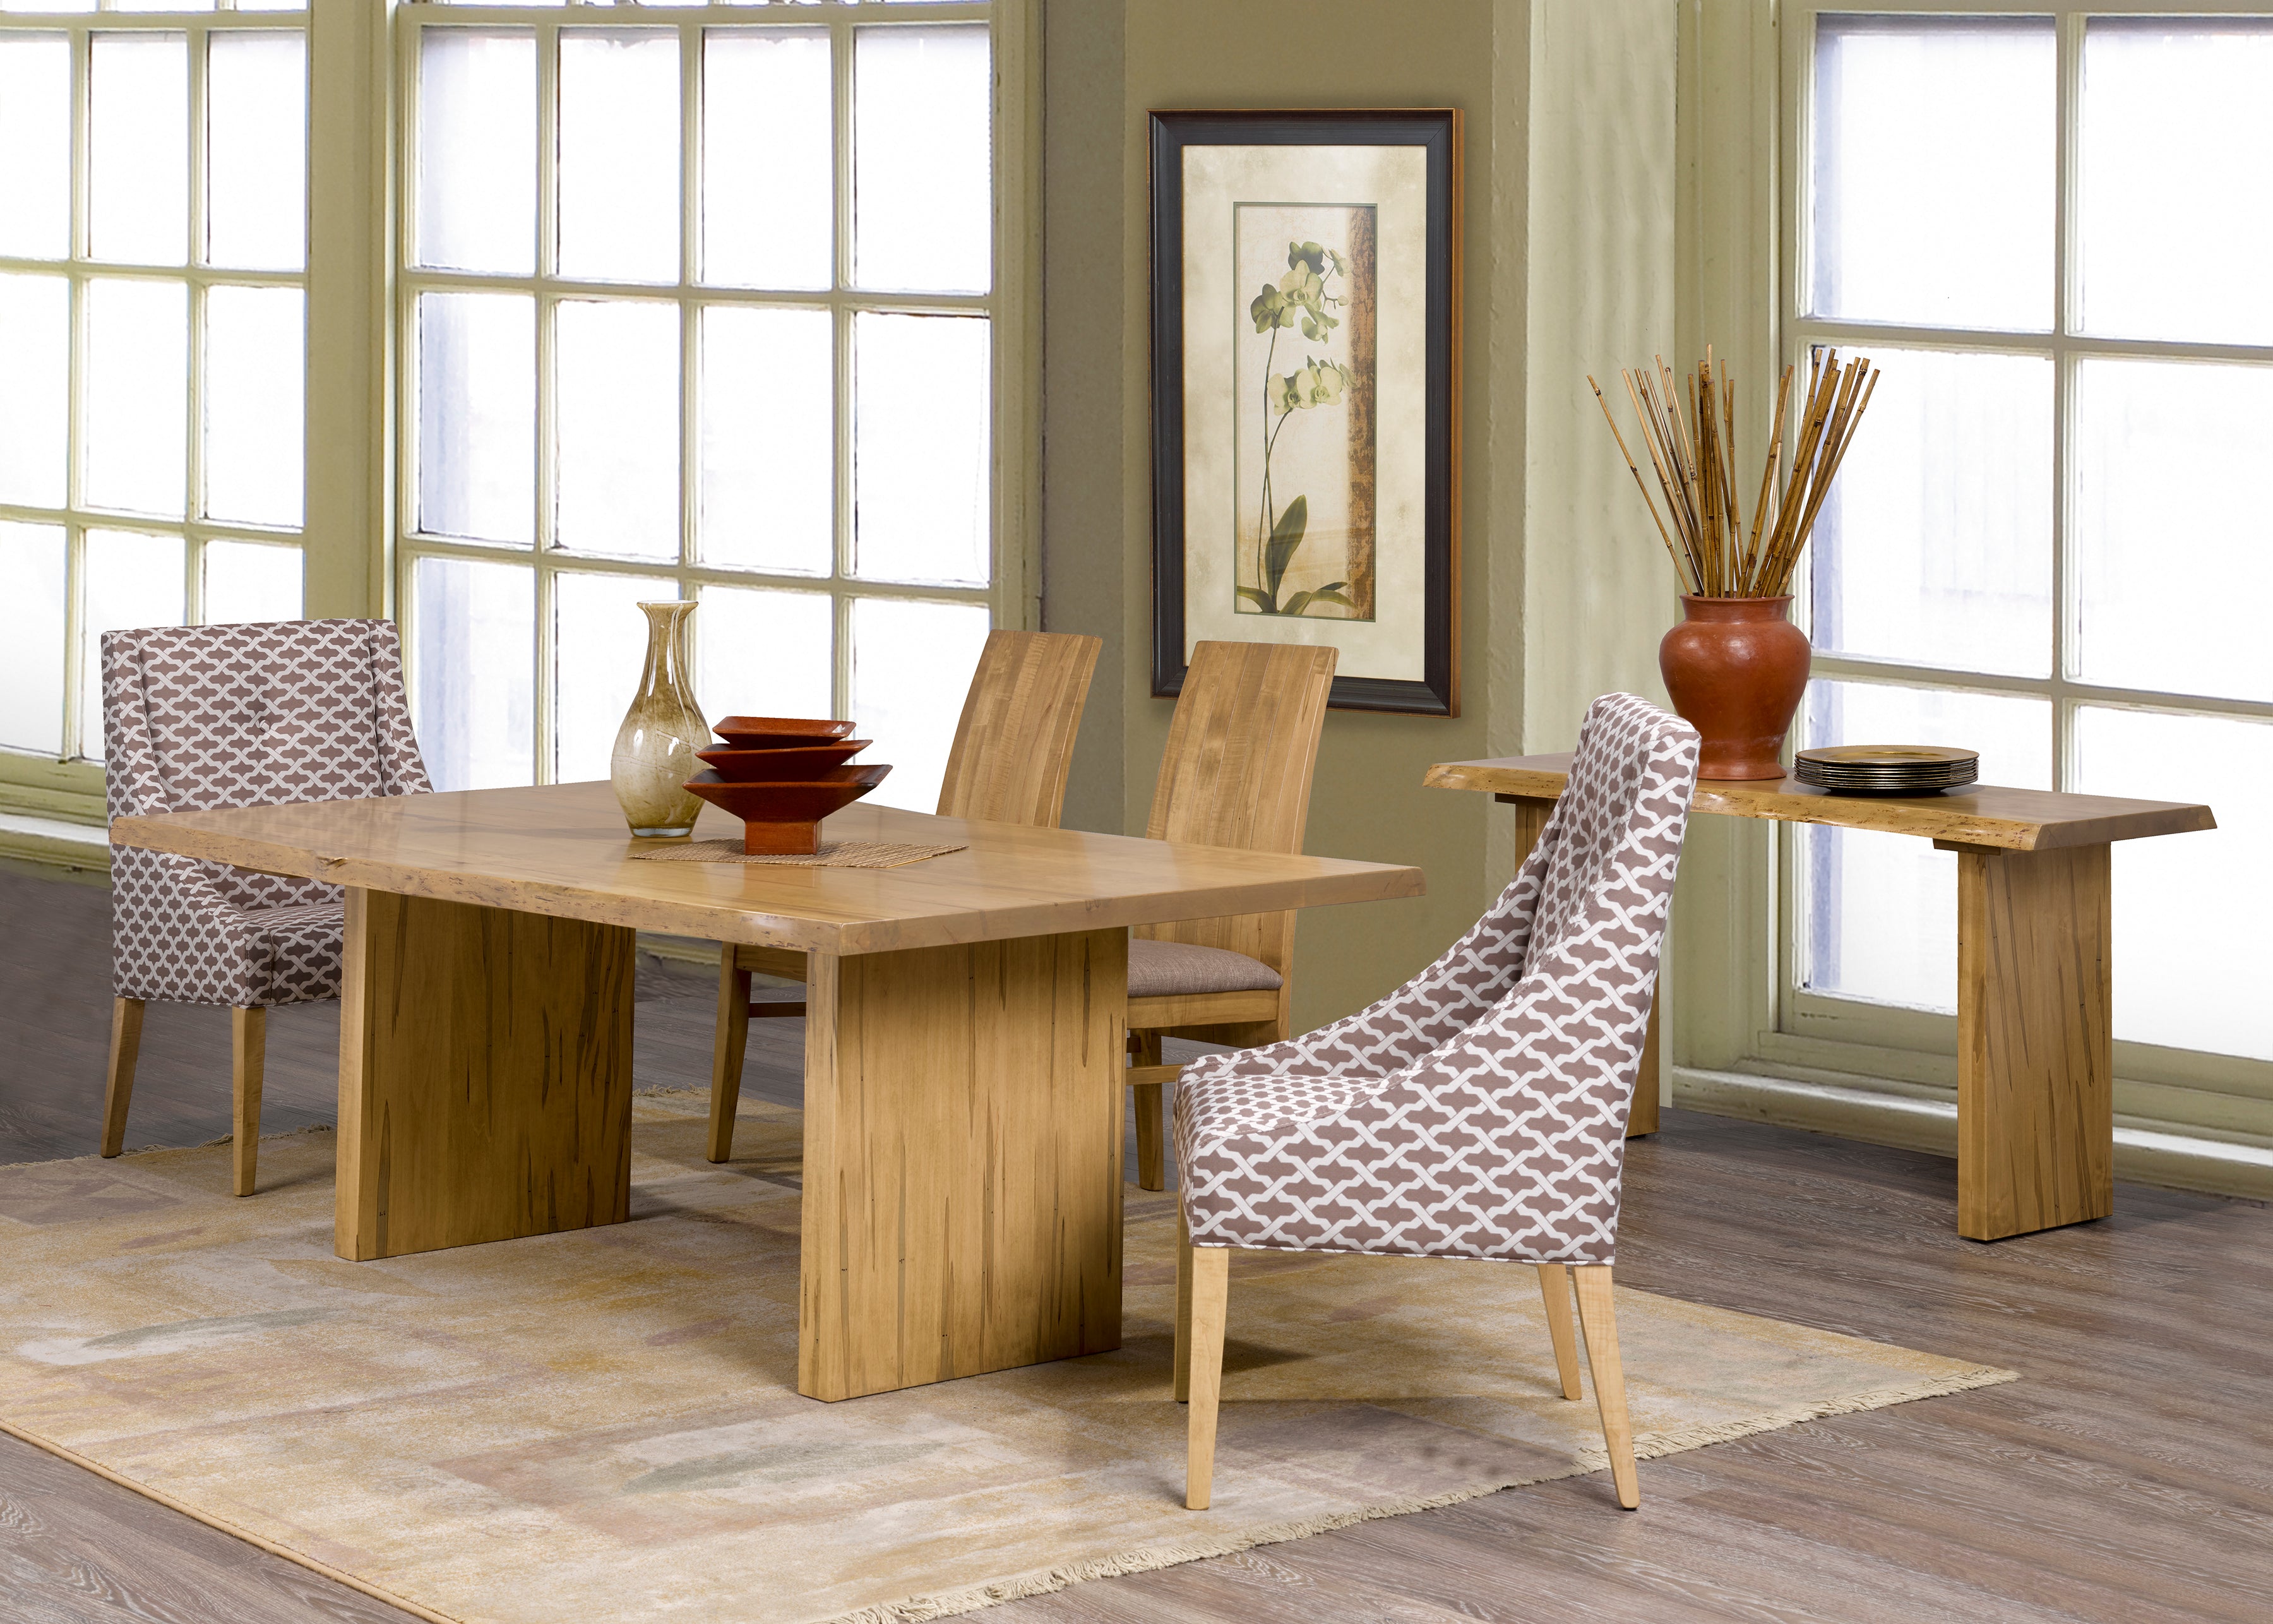 Chair as Shown | Cardinal Woodcraft Fairmont Dining Chair | Valley Ridge Furniture